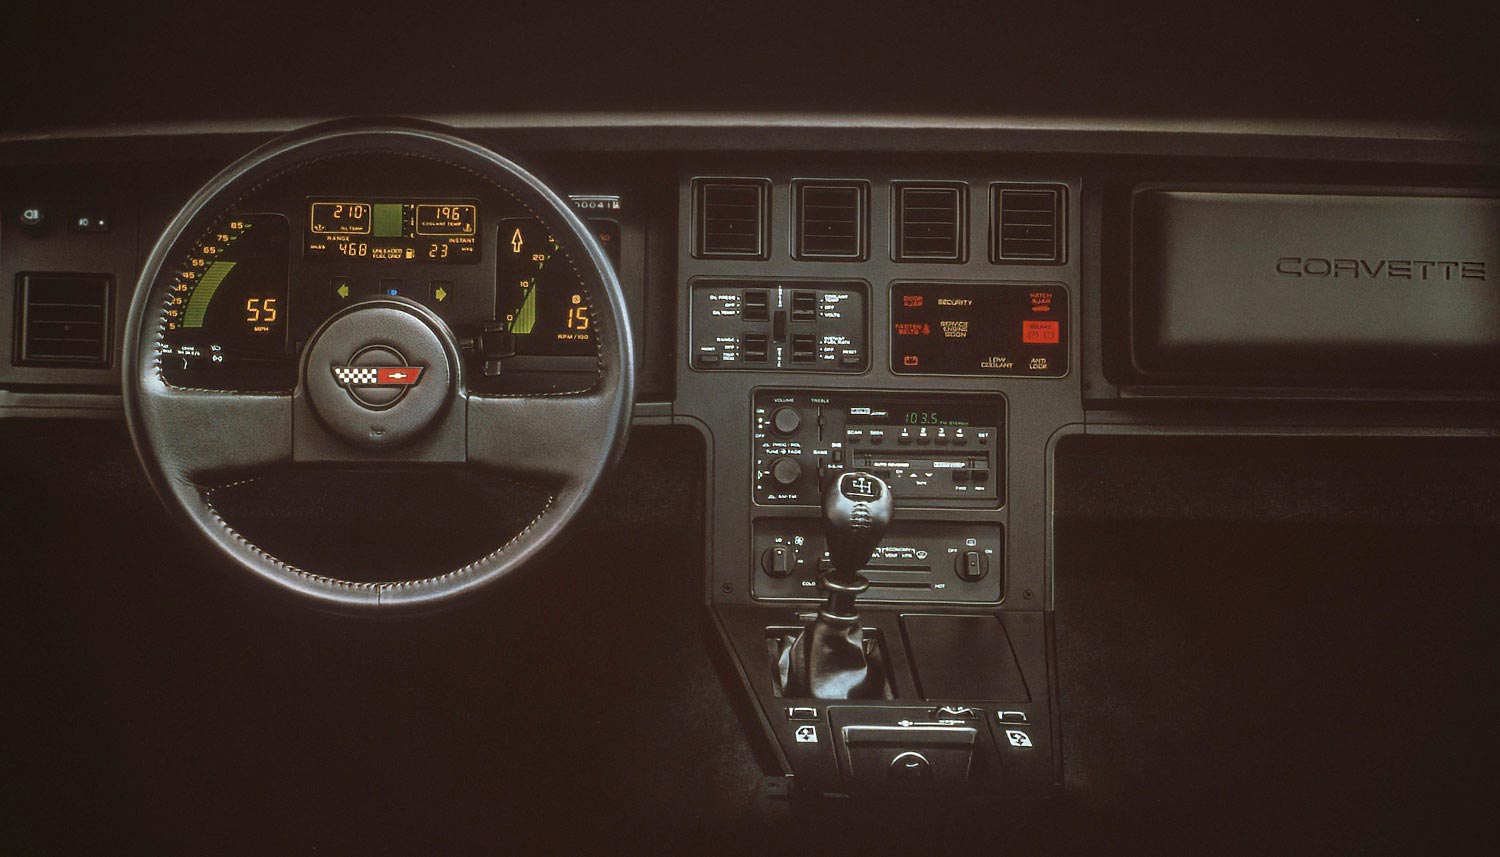 1988 Corvette Dashboard Six Speed Manual Transmission